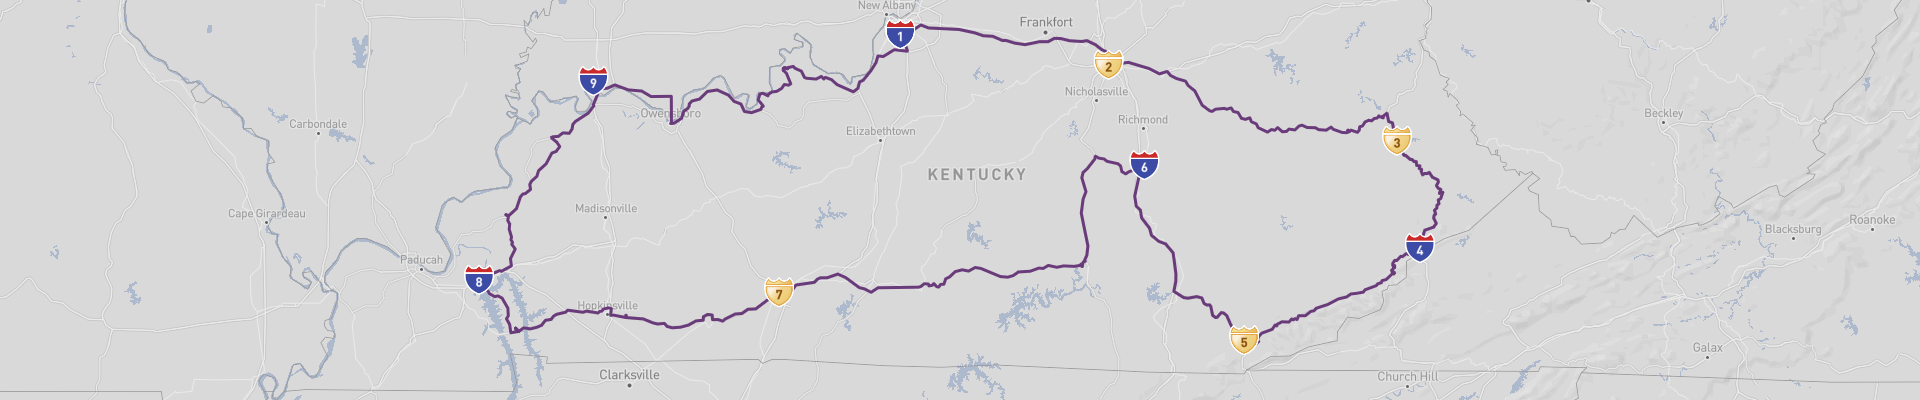 Kentucky Road Trip